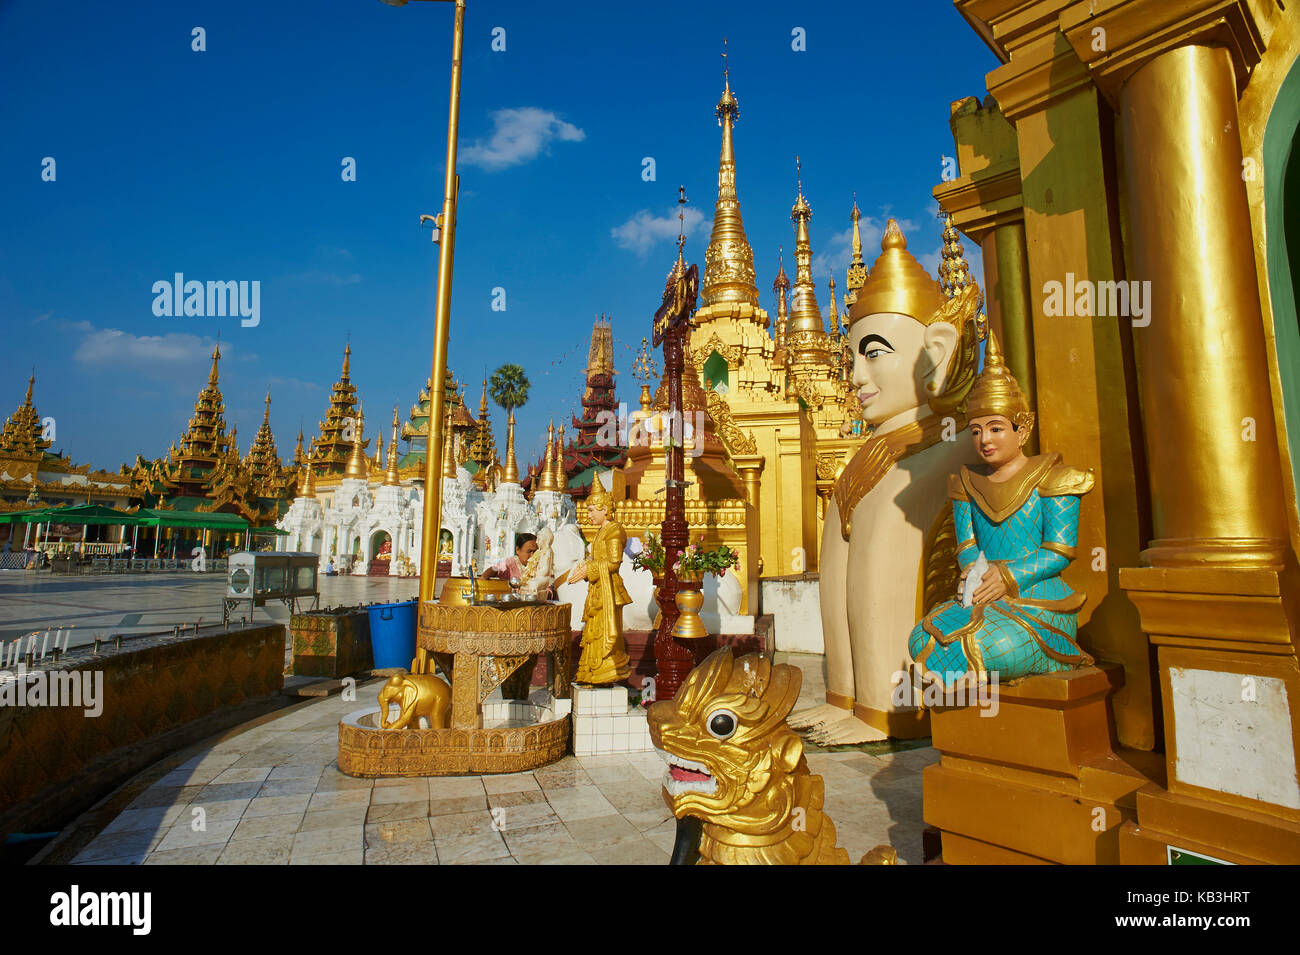 La pagode schwedagon, Myanmar, l'Asie, Banque D'Images